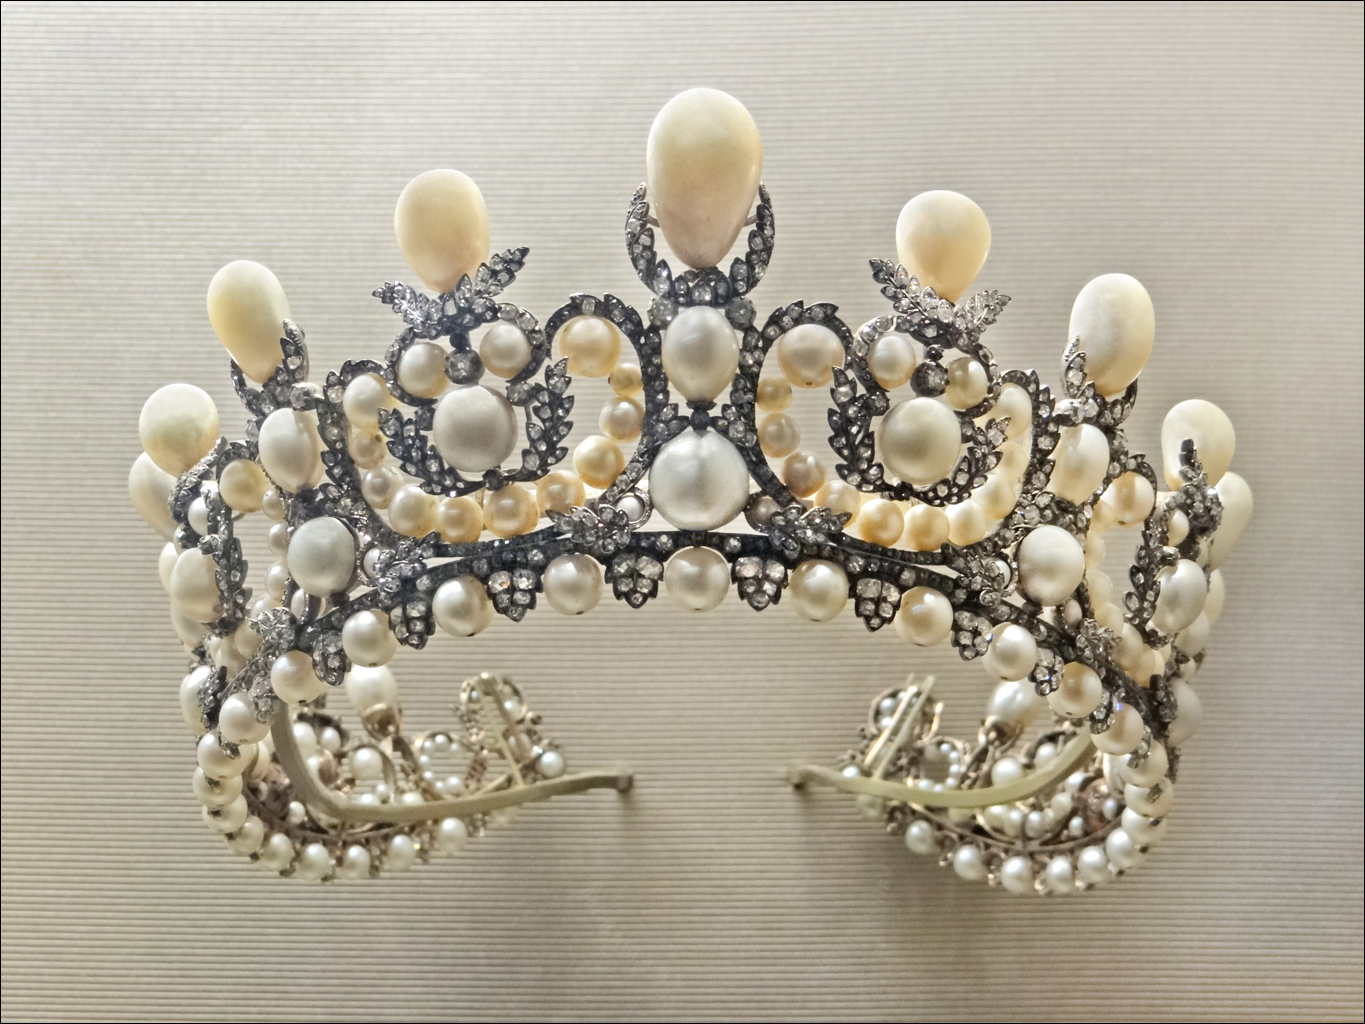 an ornate pearled tiara on display